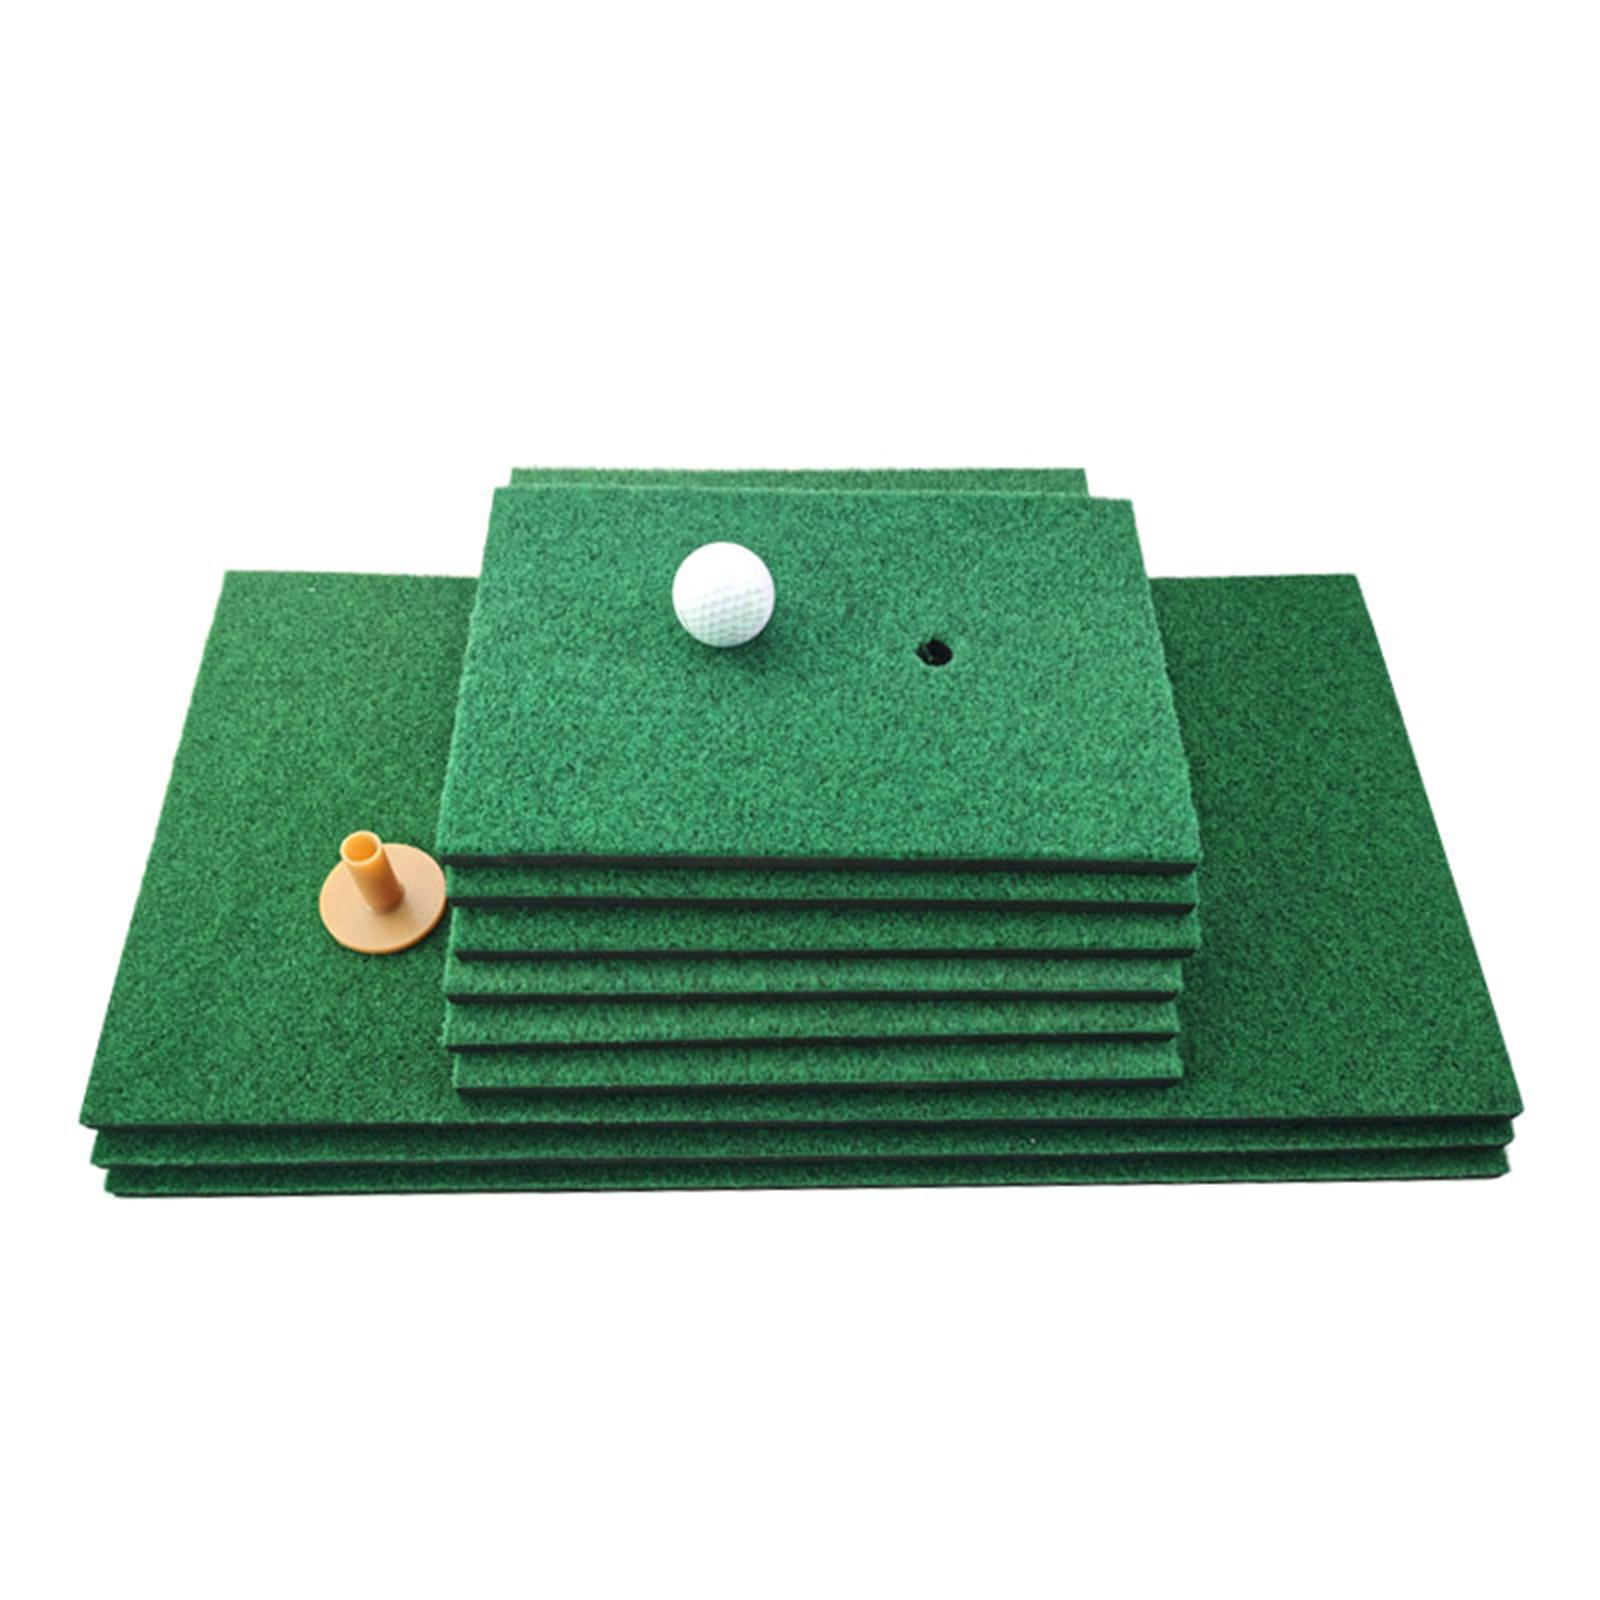 Premium Golf Practice Mat Turf Backyard Outdoor Pad Equipment Gear  60x30cm